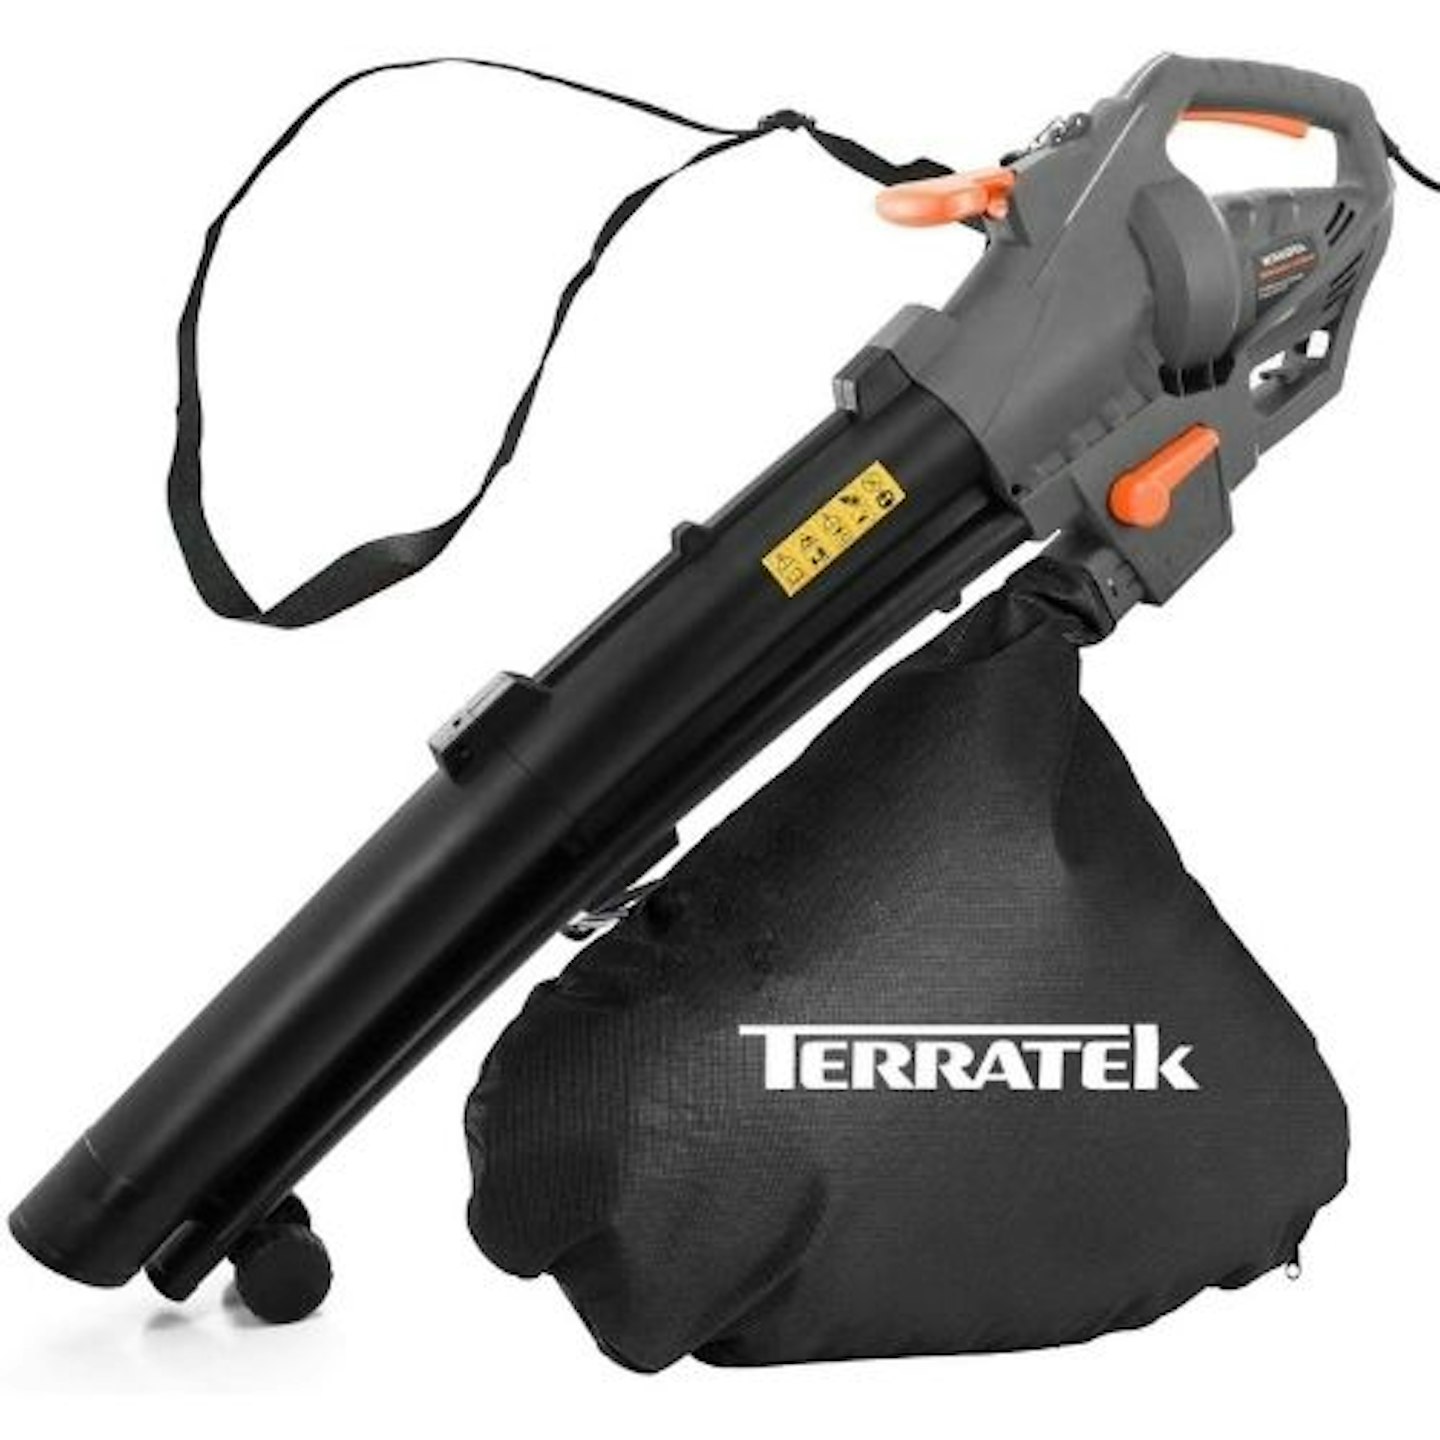 Terratek Leaf blower Garden Vacuum and Shredder